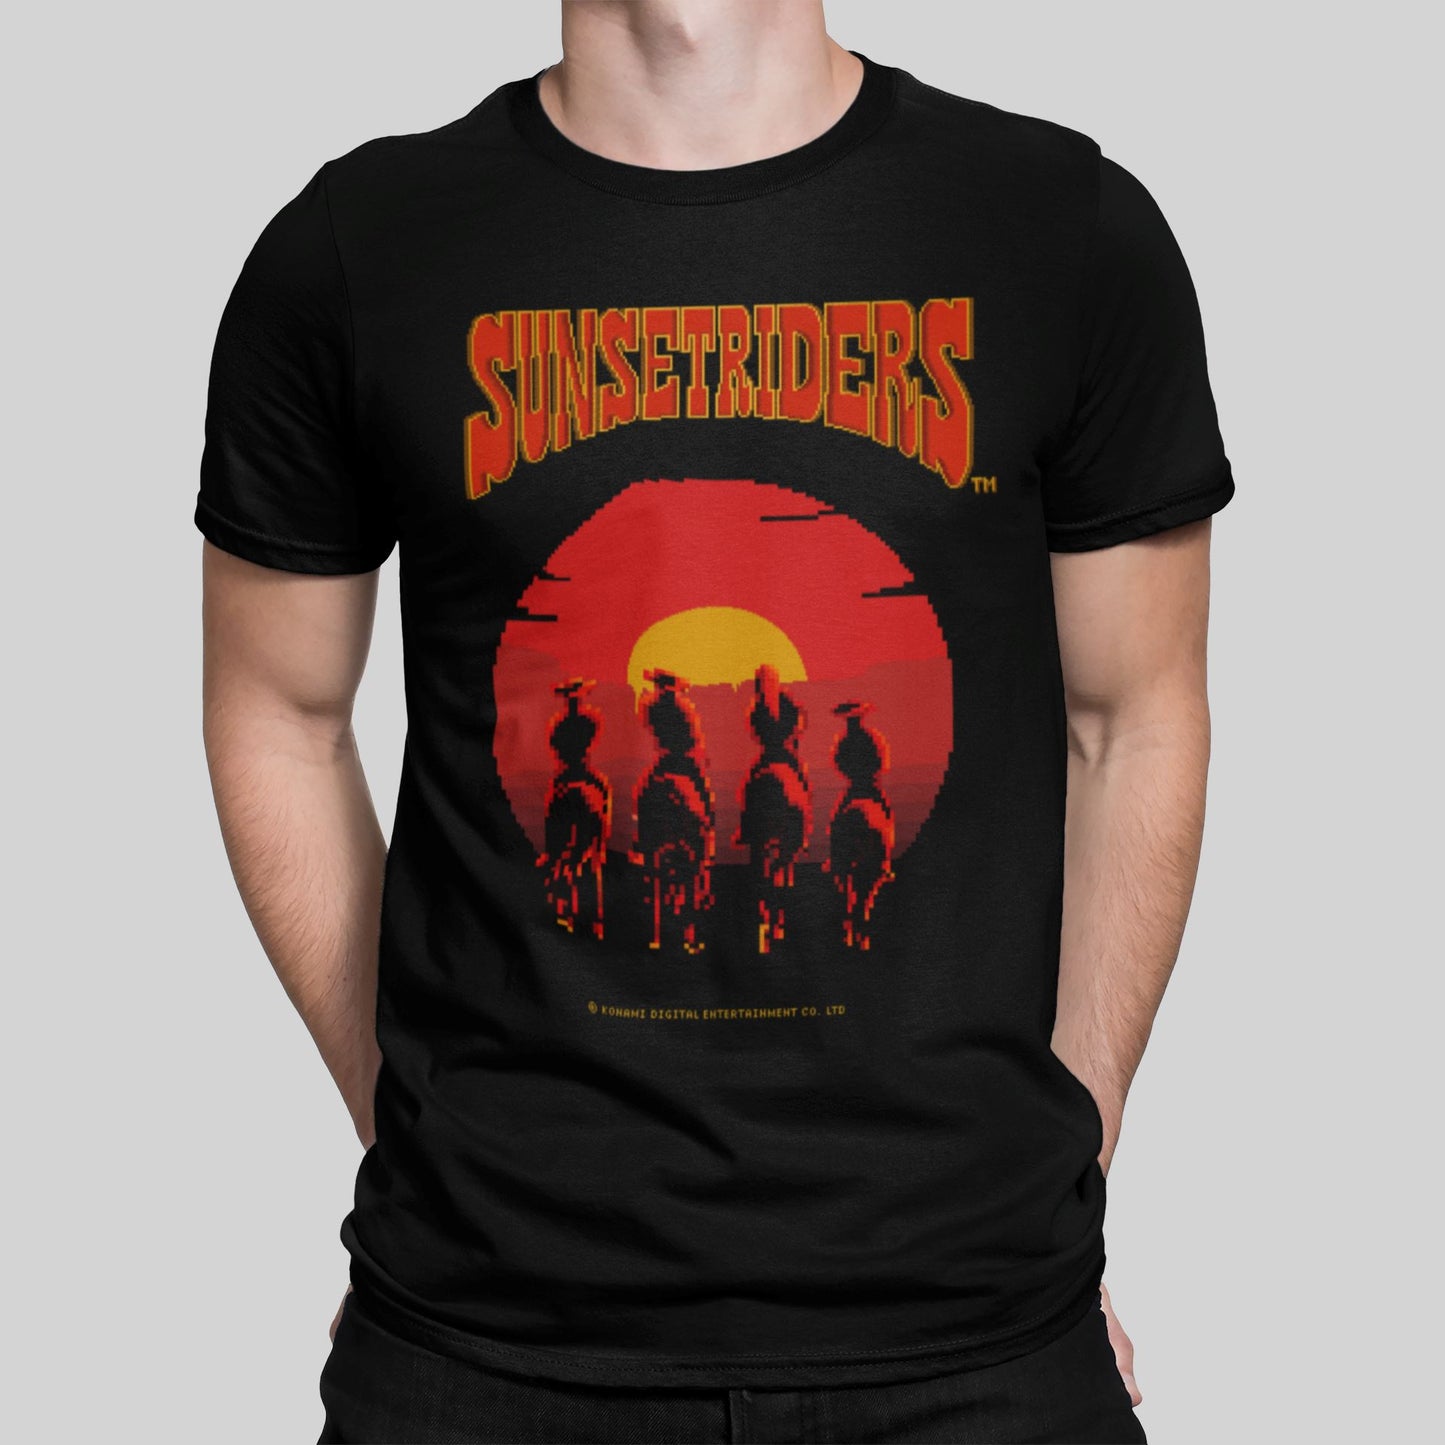 Sunset Riders Retro Gaming T-Shirt T-Shirt Seven Squared Small 34-36" Black 